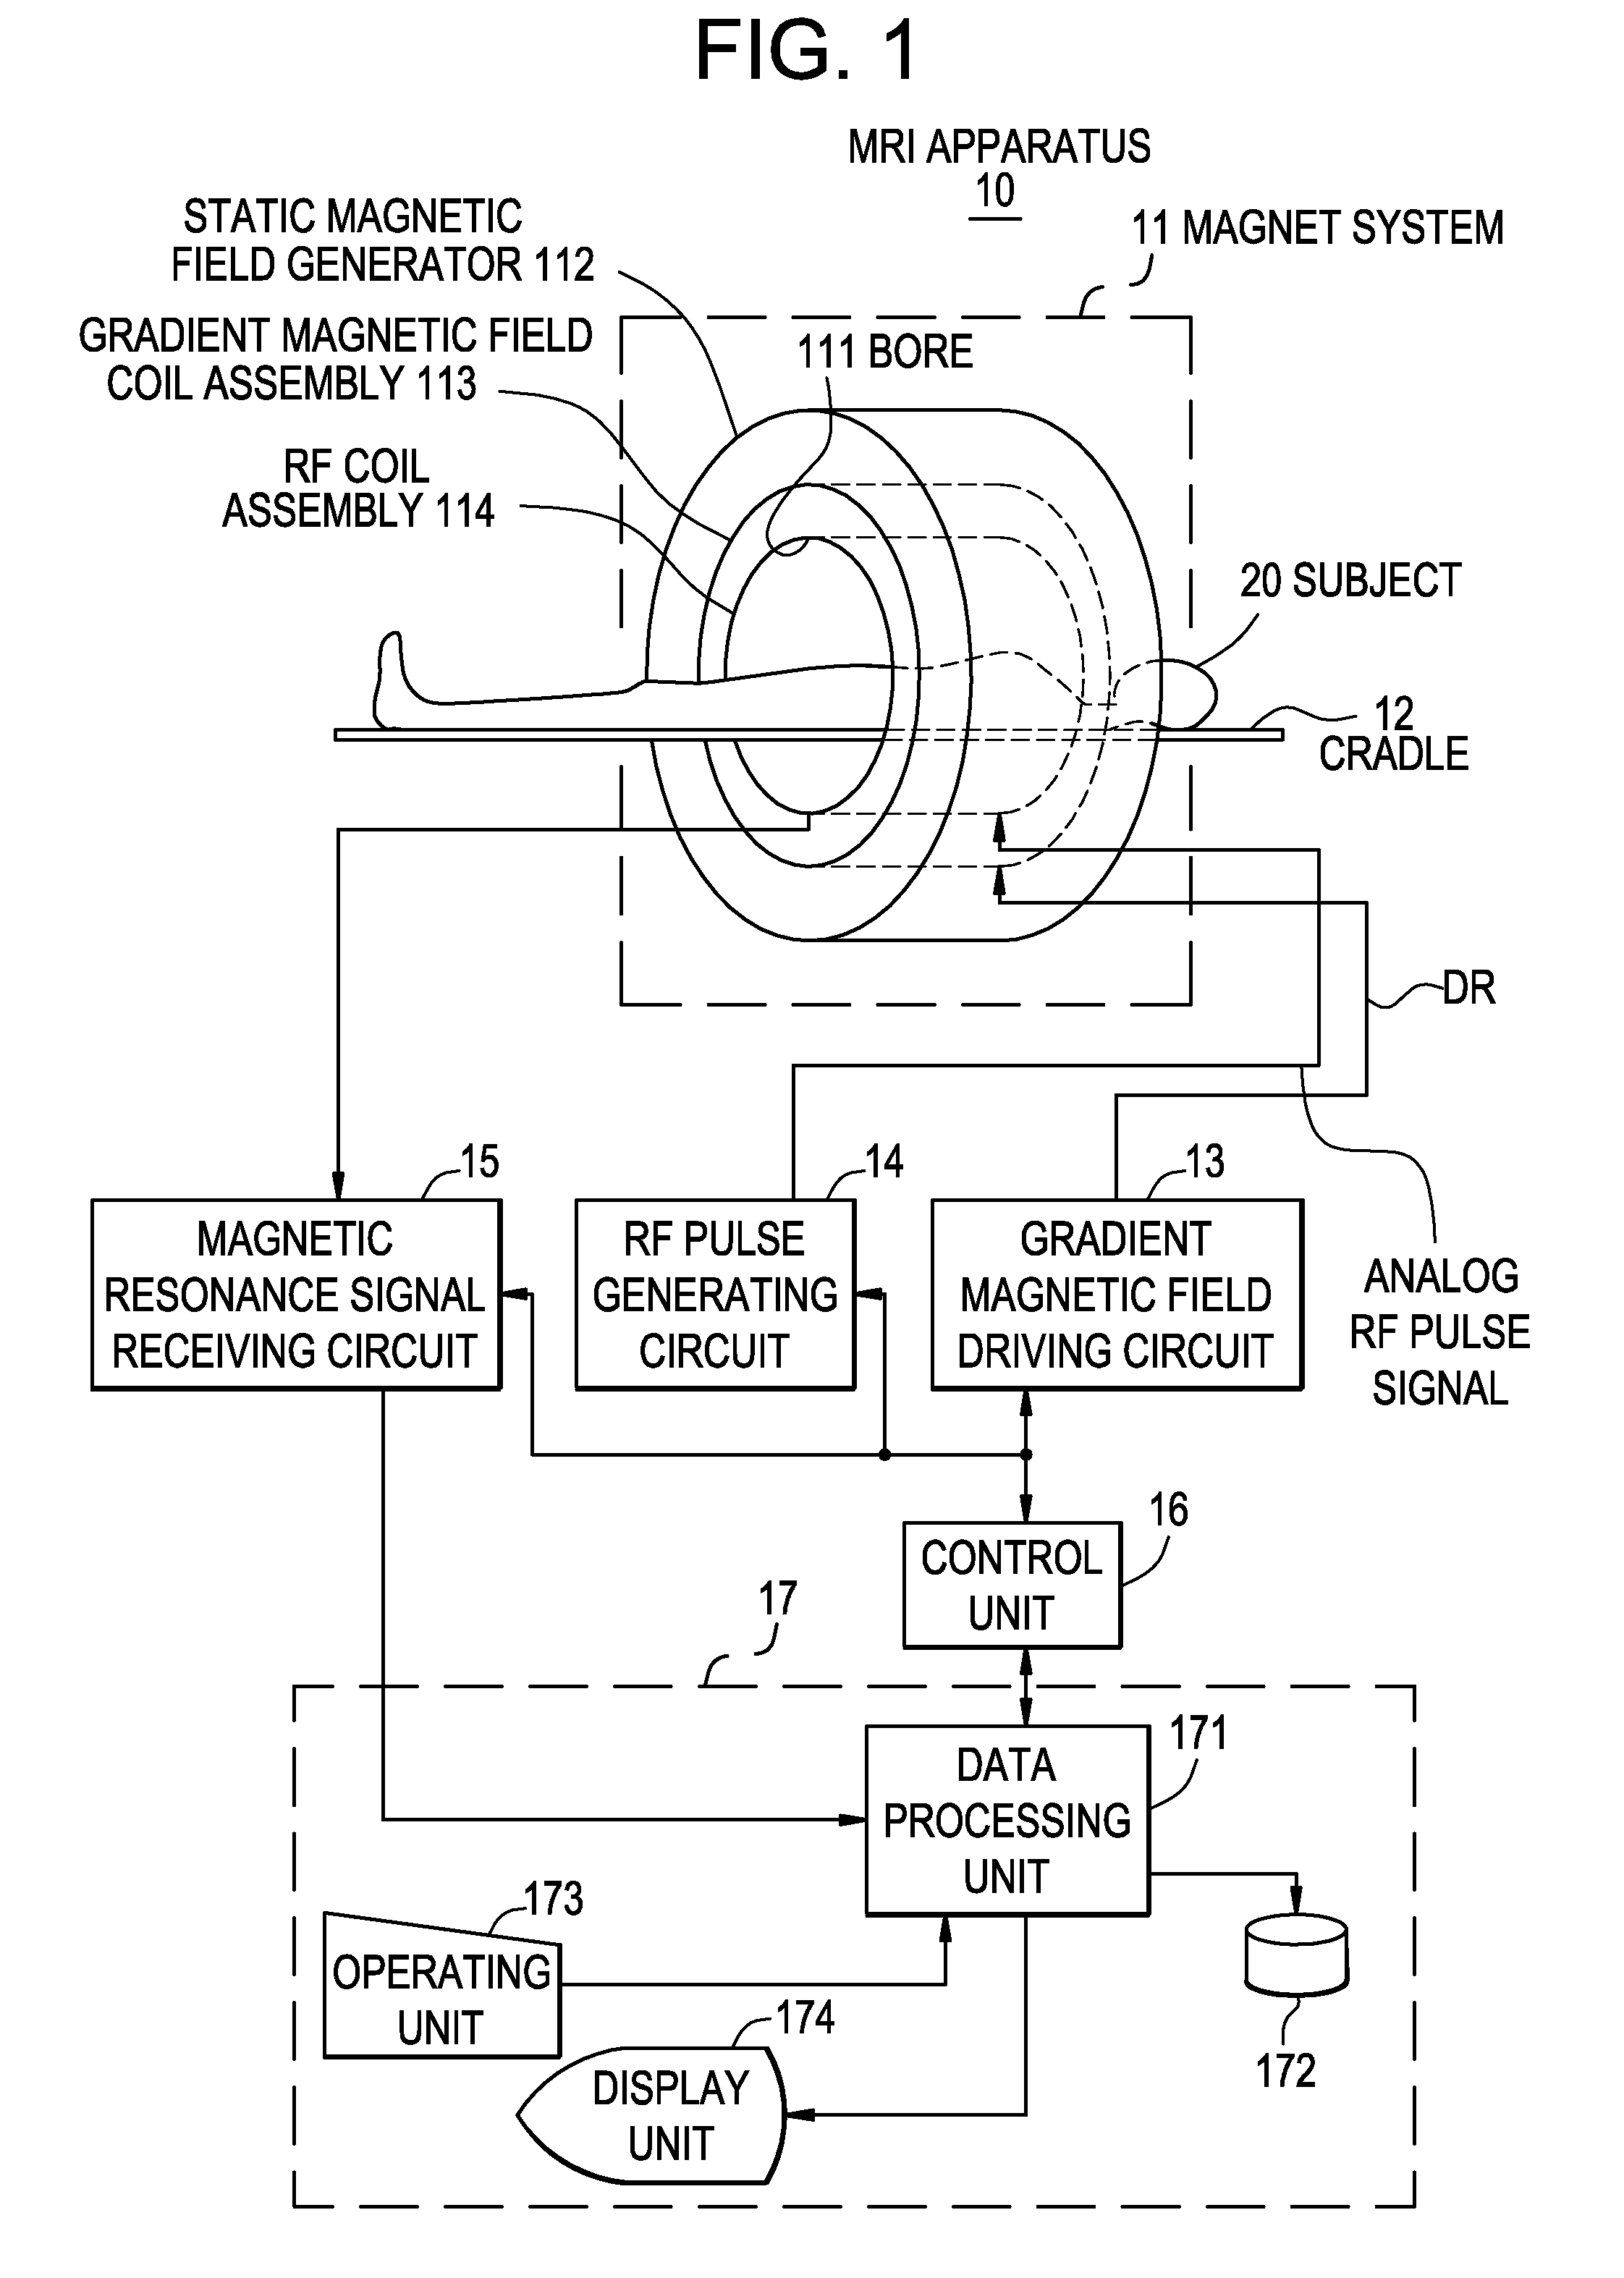 MRI apparatus and RF pulse generating circuit